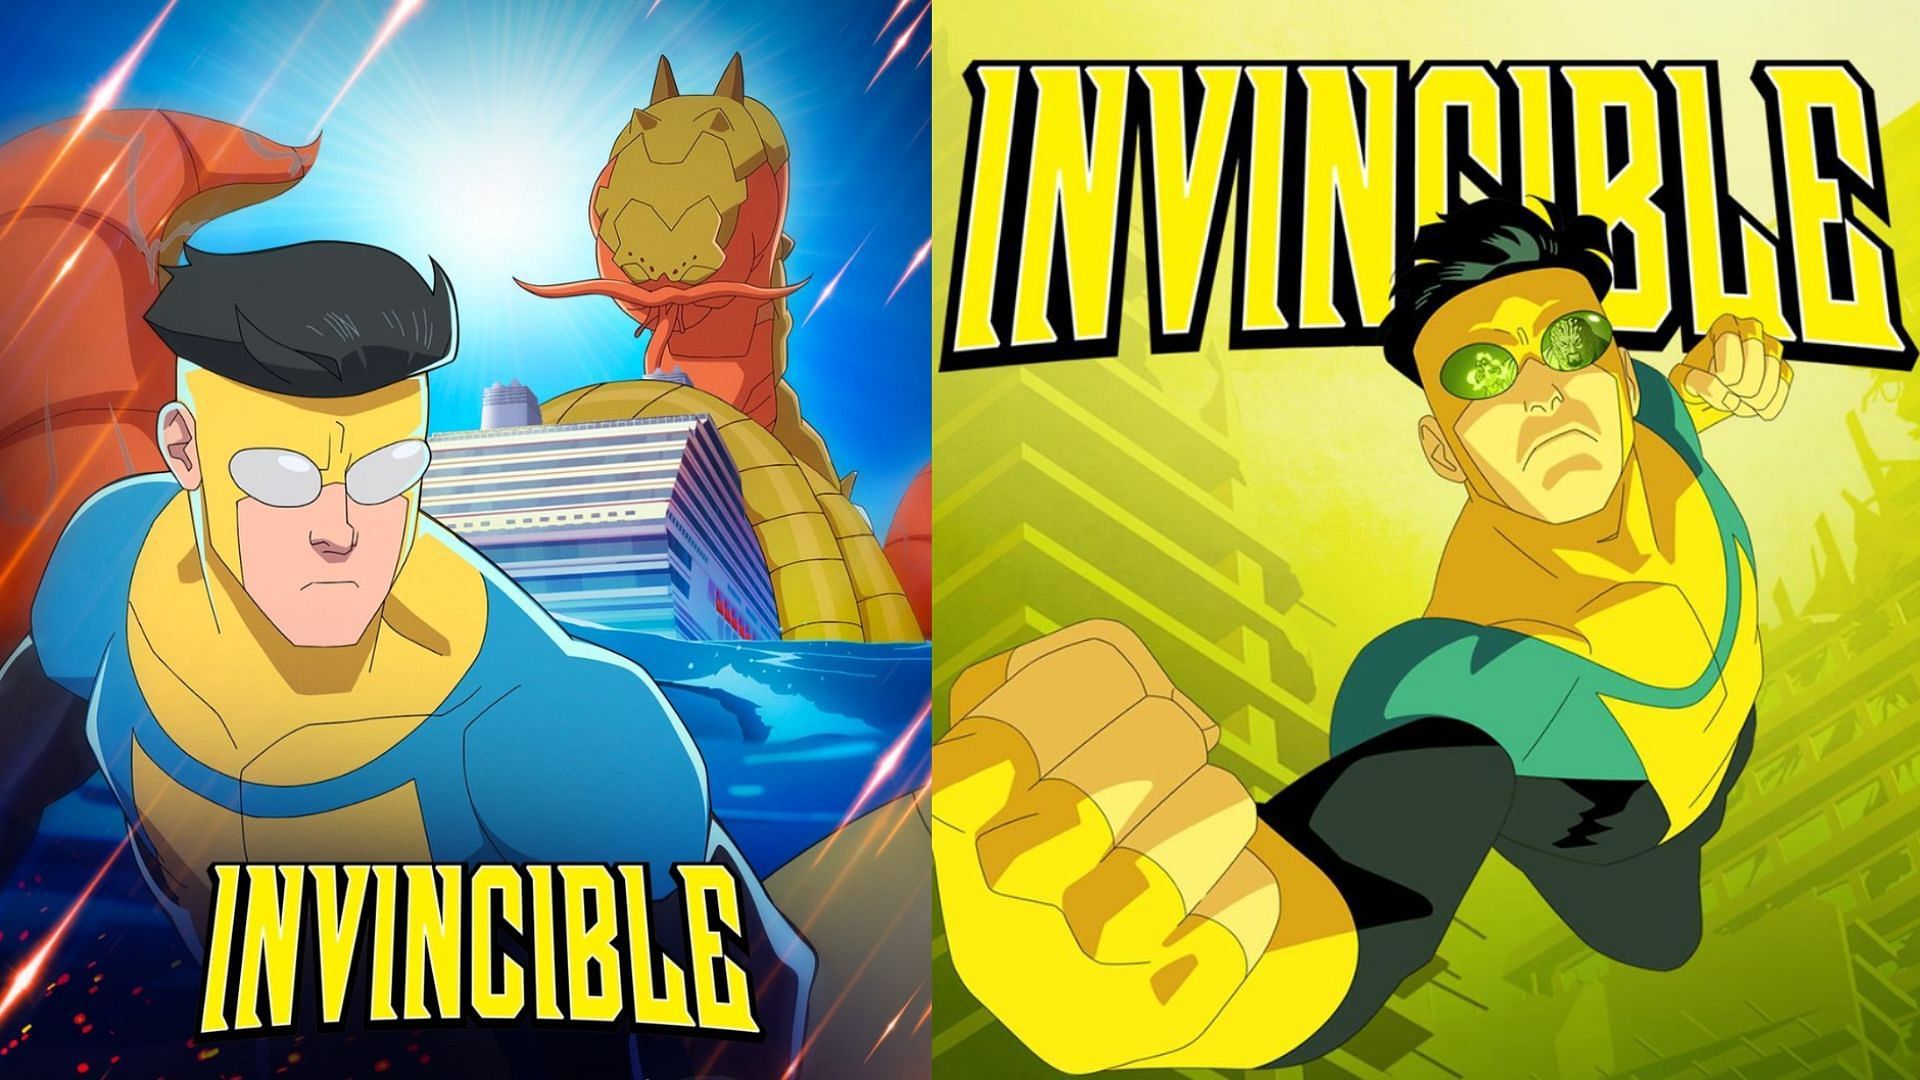 Invincible season 3 is in production (Image via Instagram@InvincibleHQ)